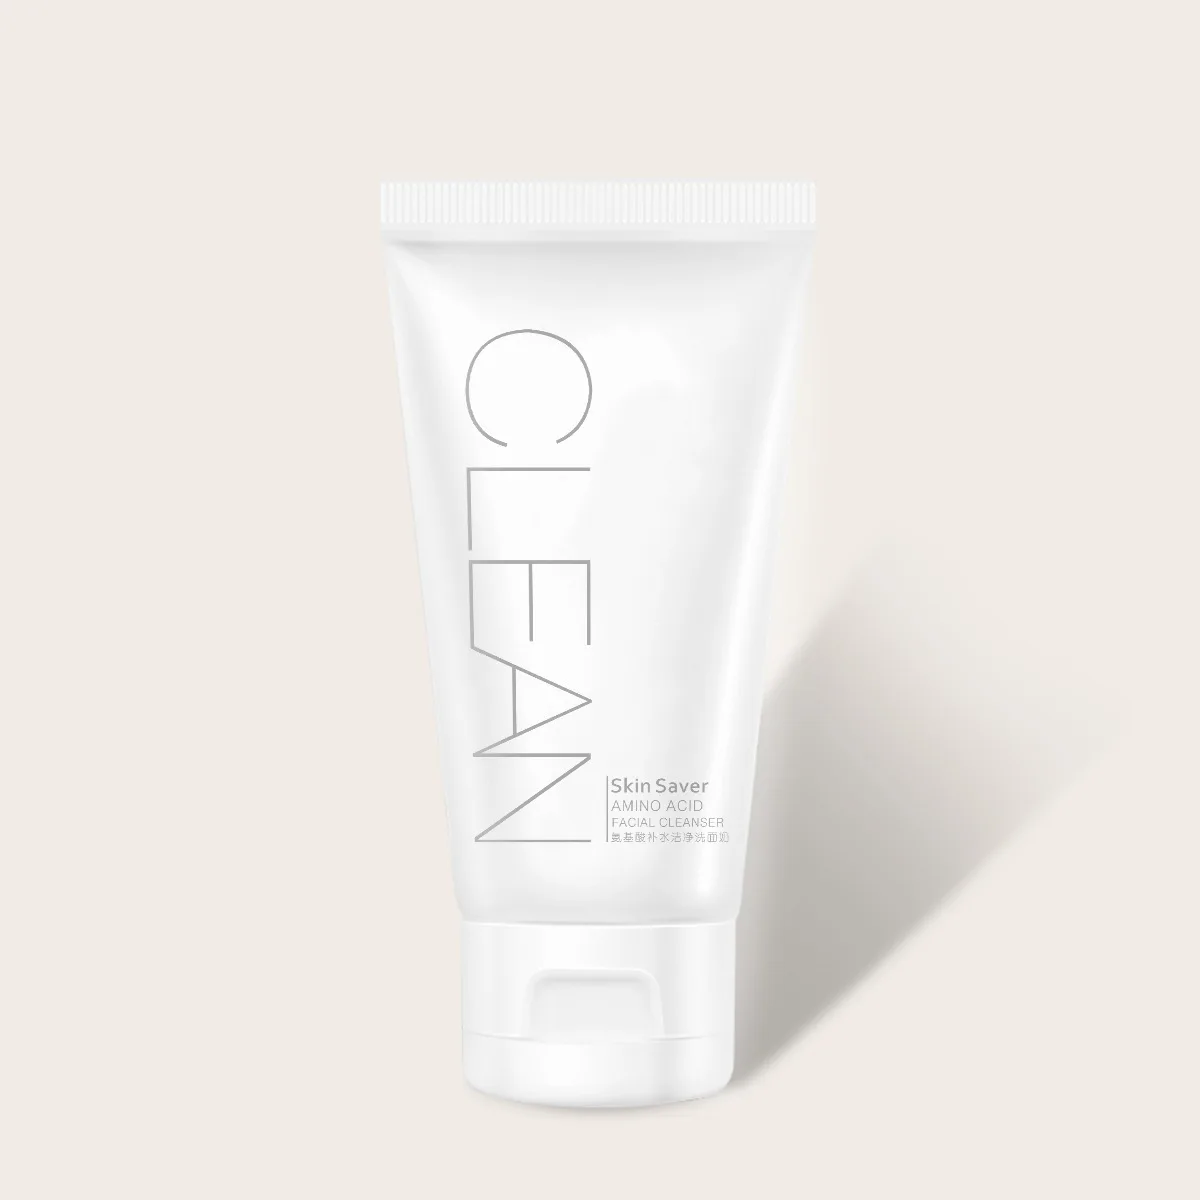 150g amino acid facial cleanser cleaning, moisturizing, mild oil control facial cleanser foam acarid